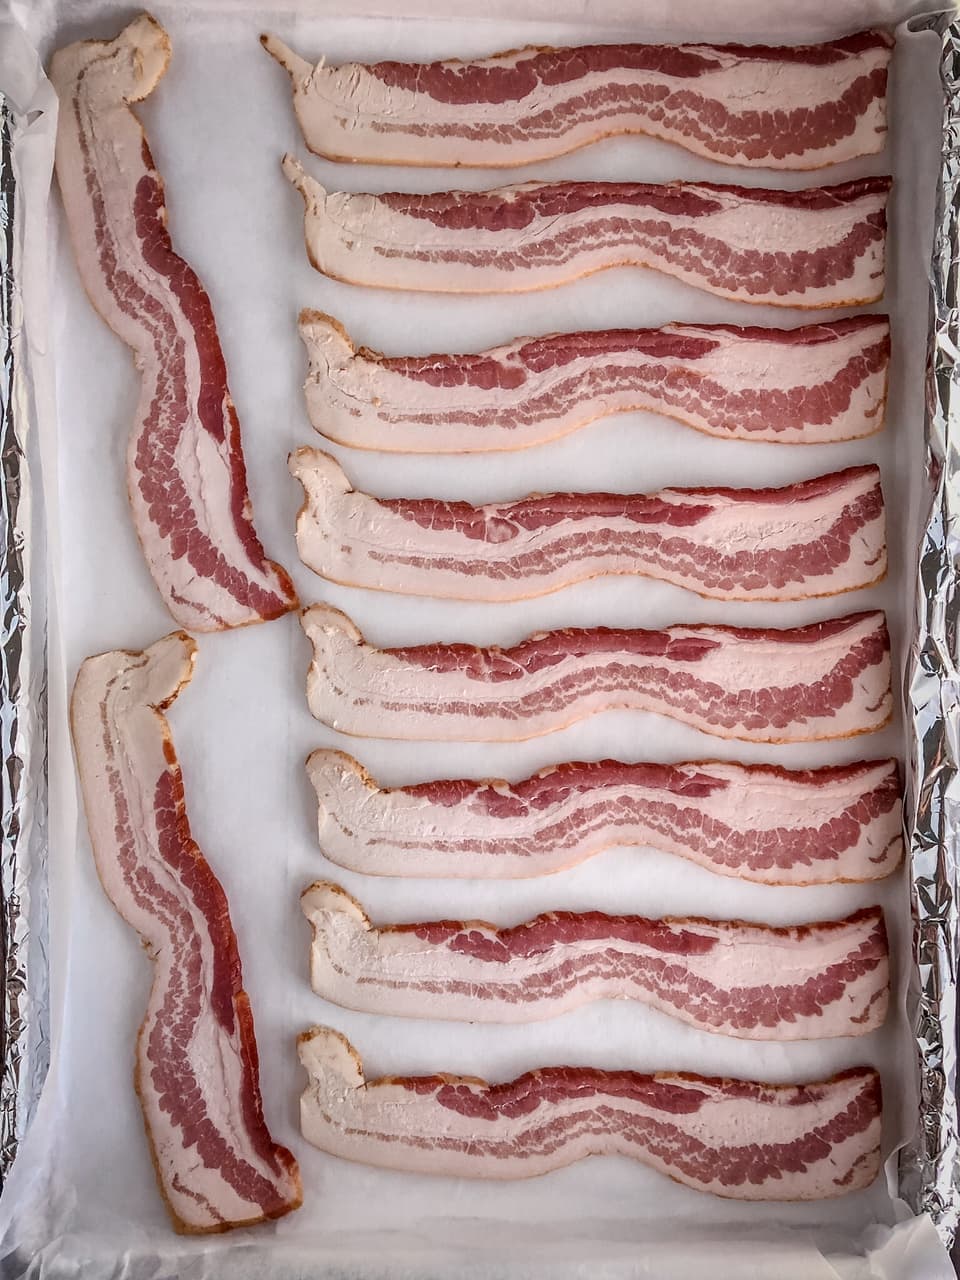 raw bacon on a baking tray